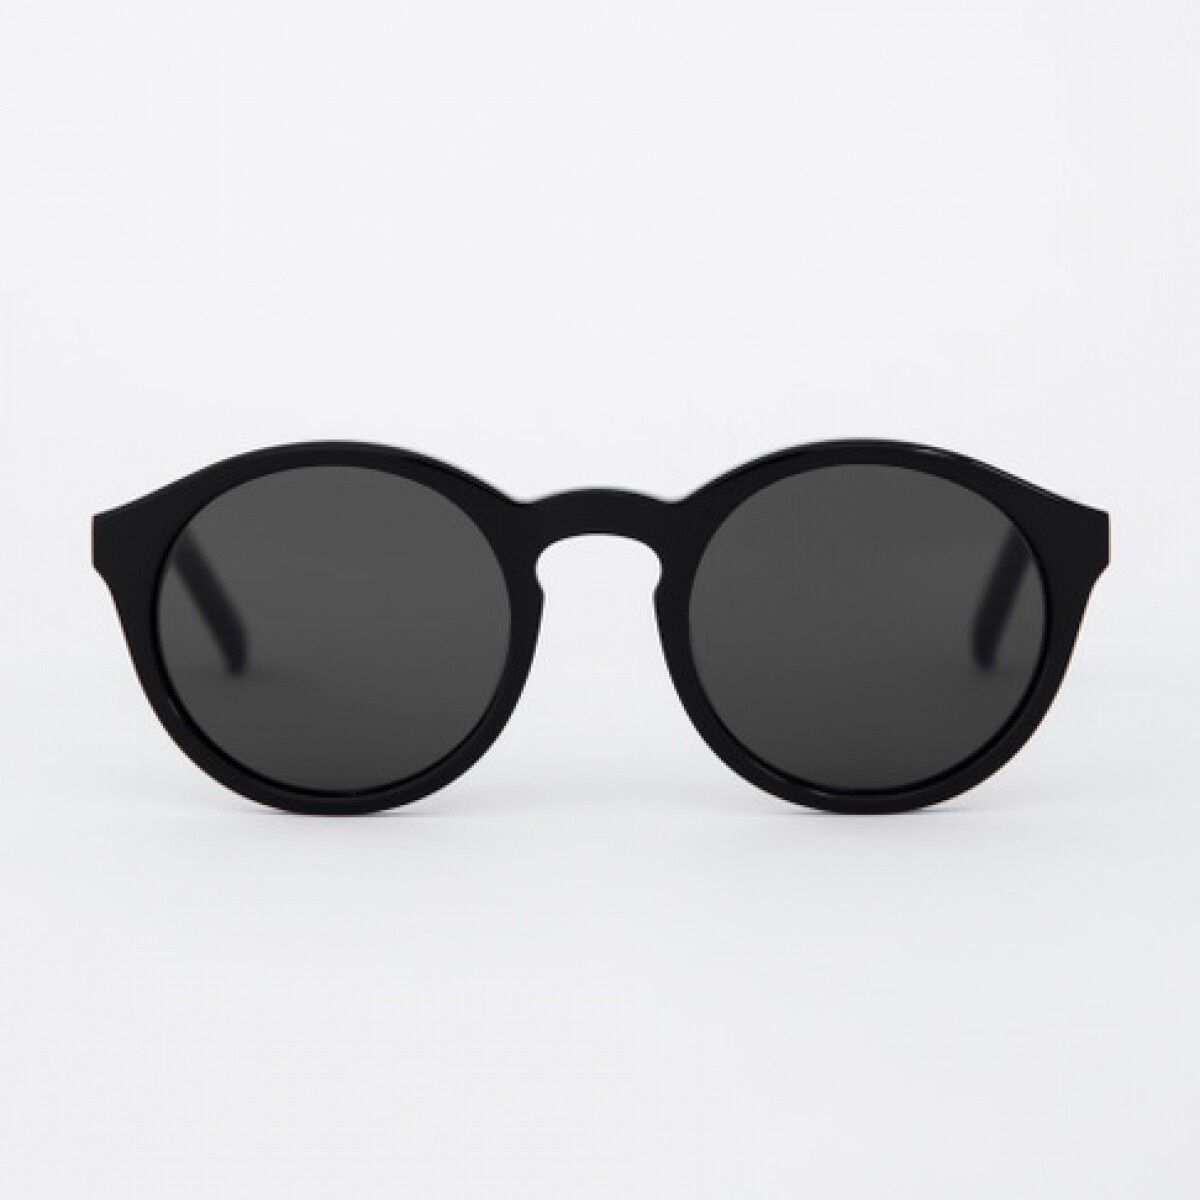 Monokel Eyewear - Barstow Black - Grey Solid Lens